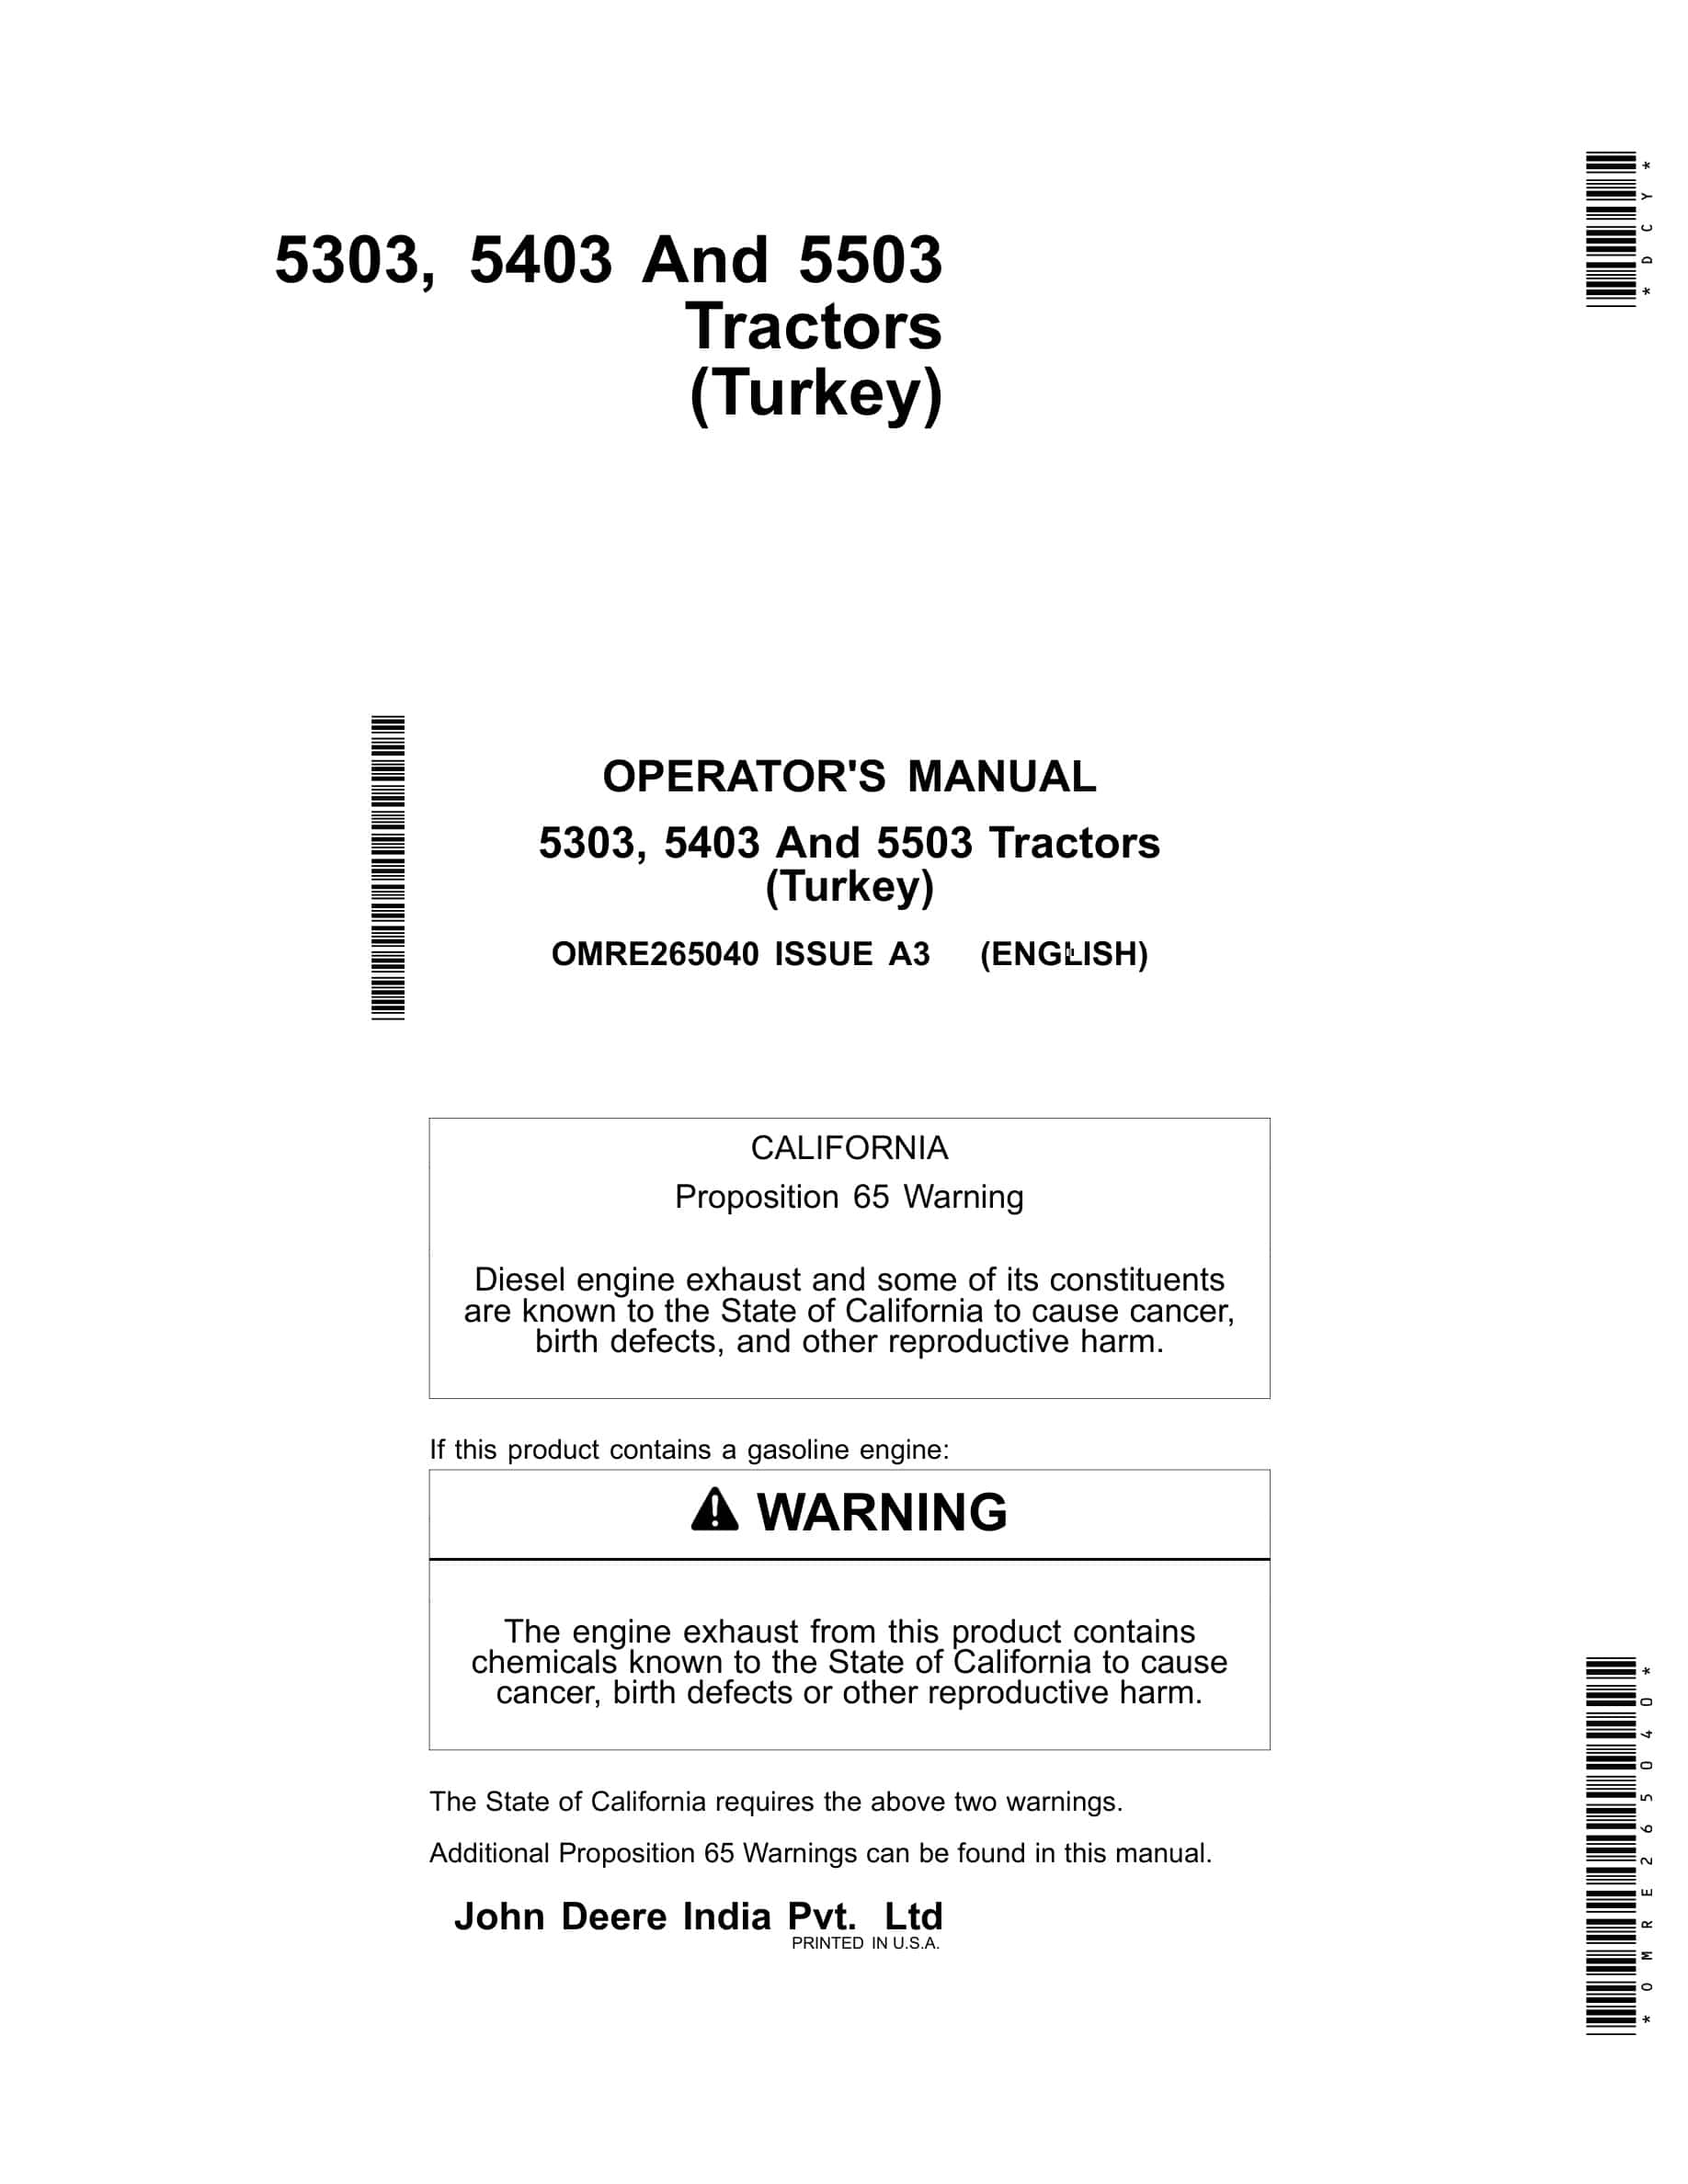 John Deere 5303, 5403 And 5503 Tractors Operator Manuals OMRE265040-1